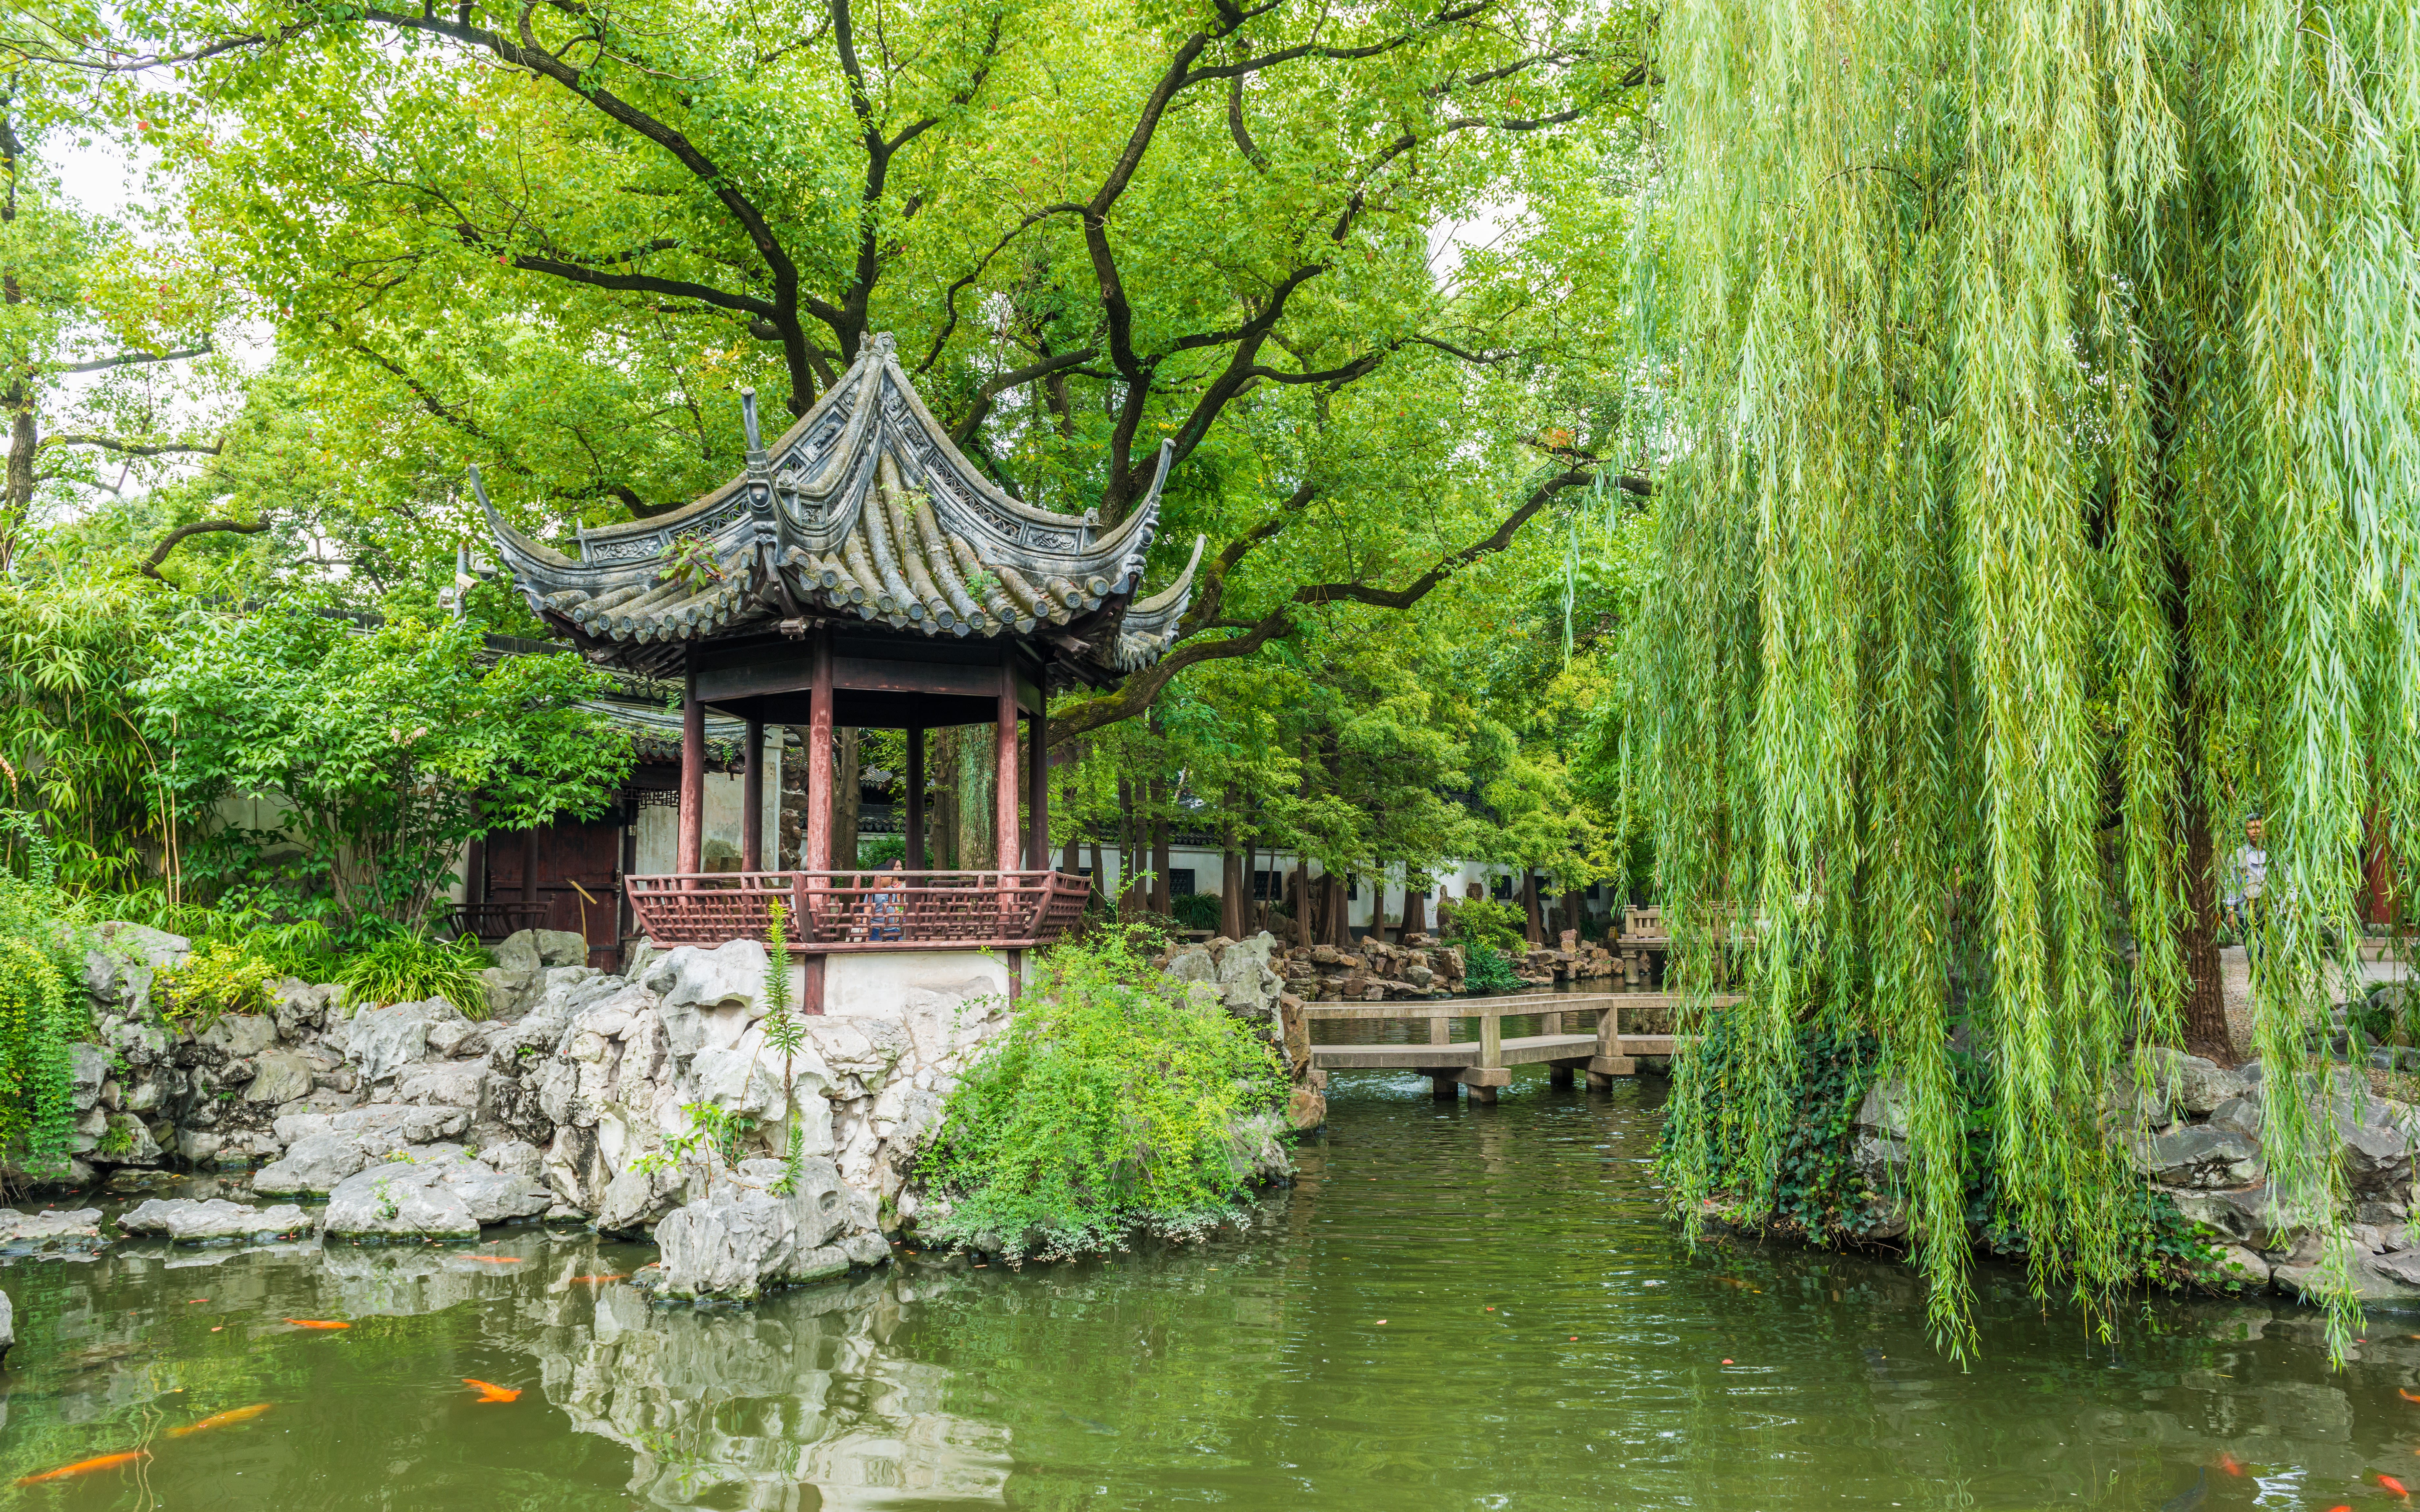 A picture of Yu Garden in Shanghai